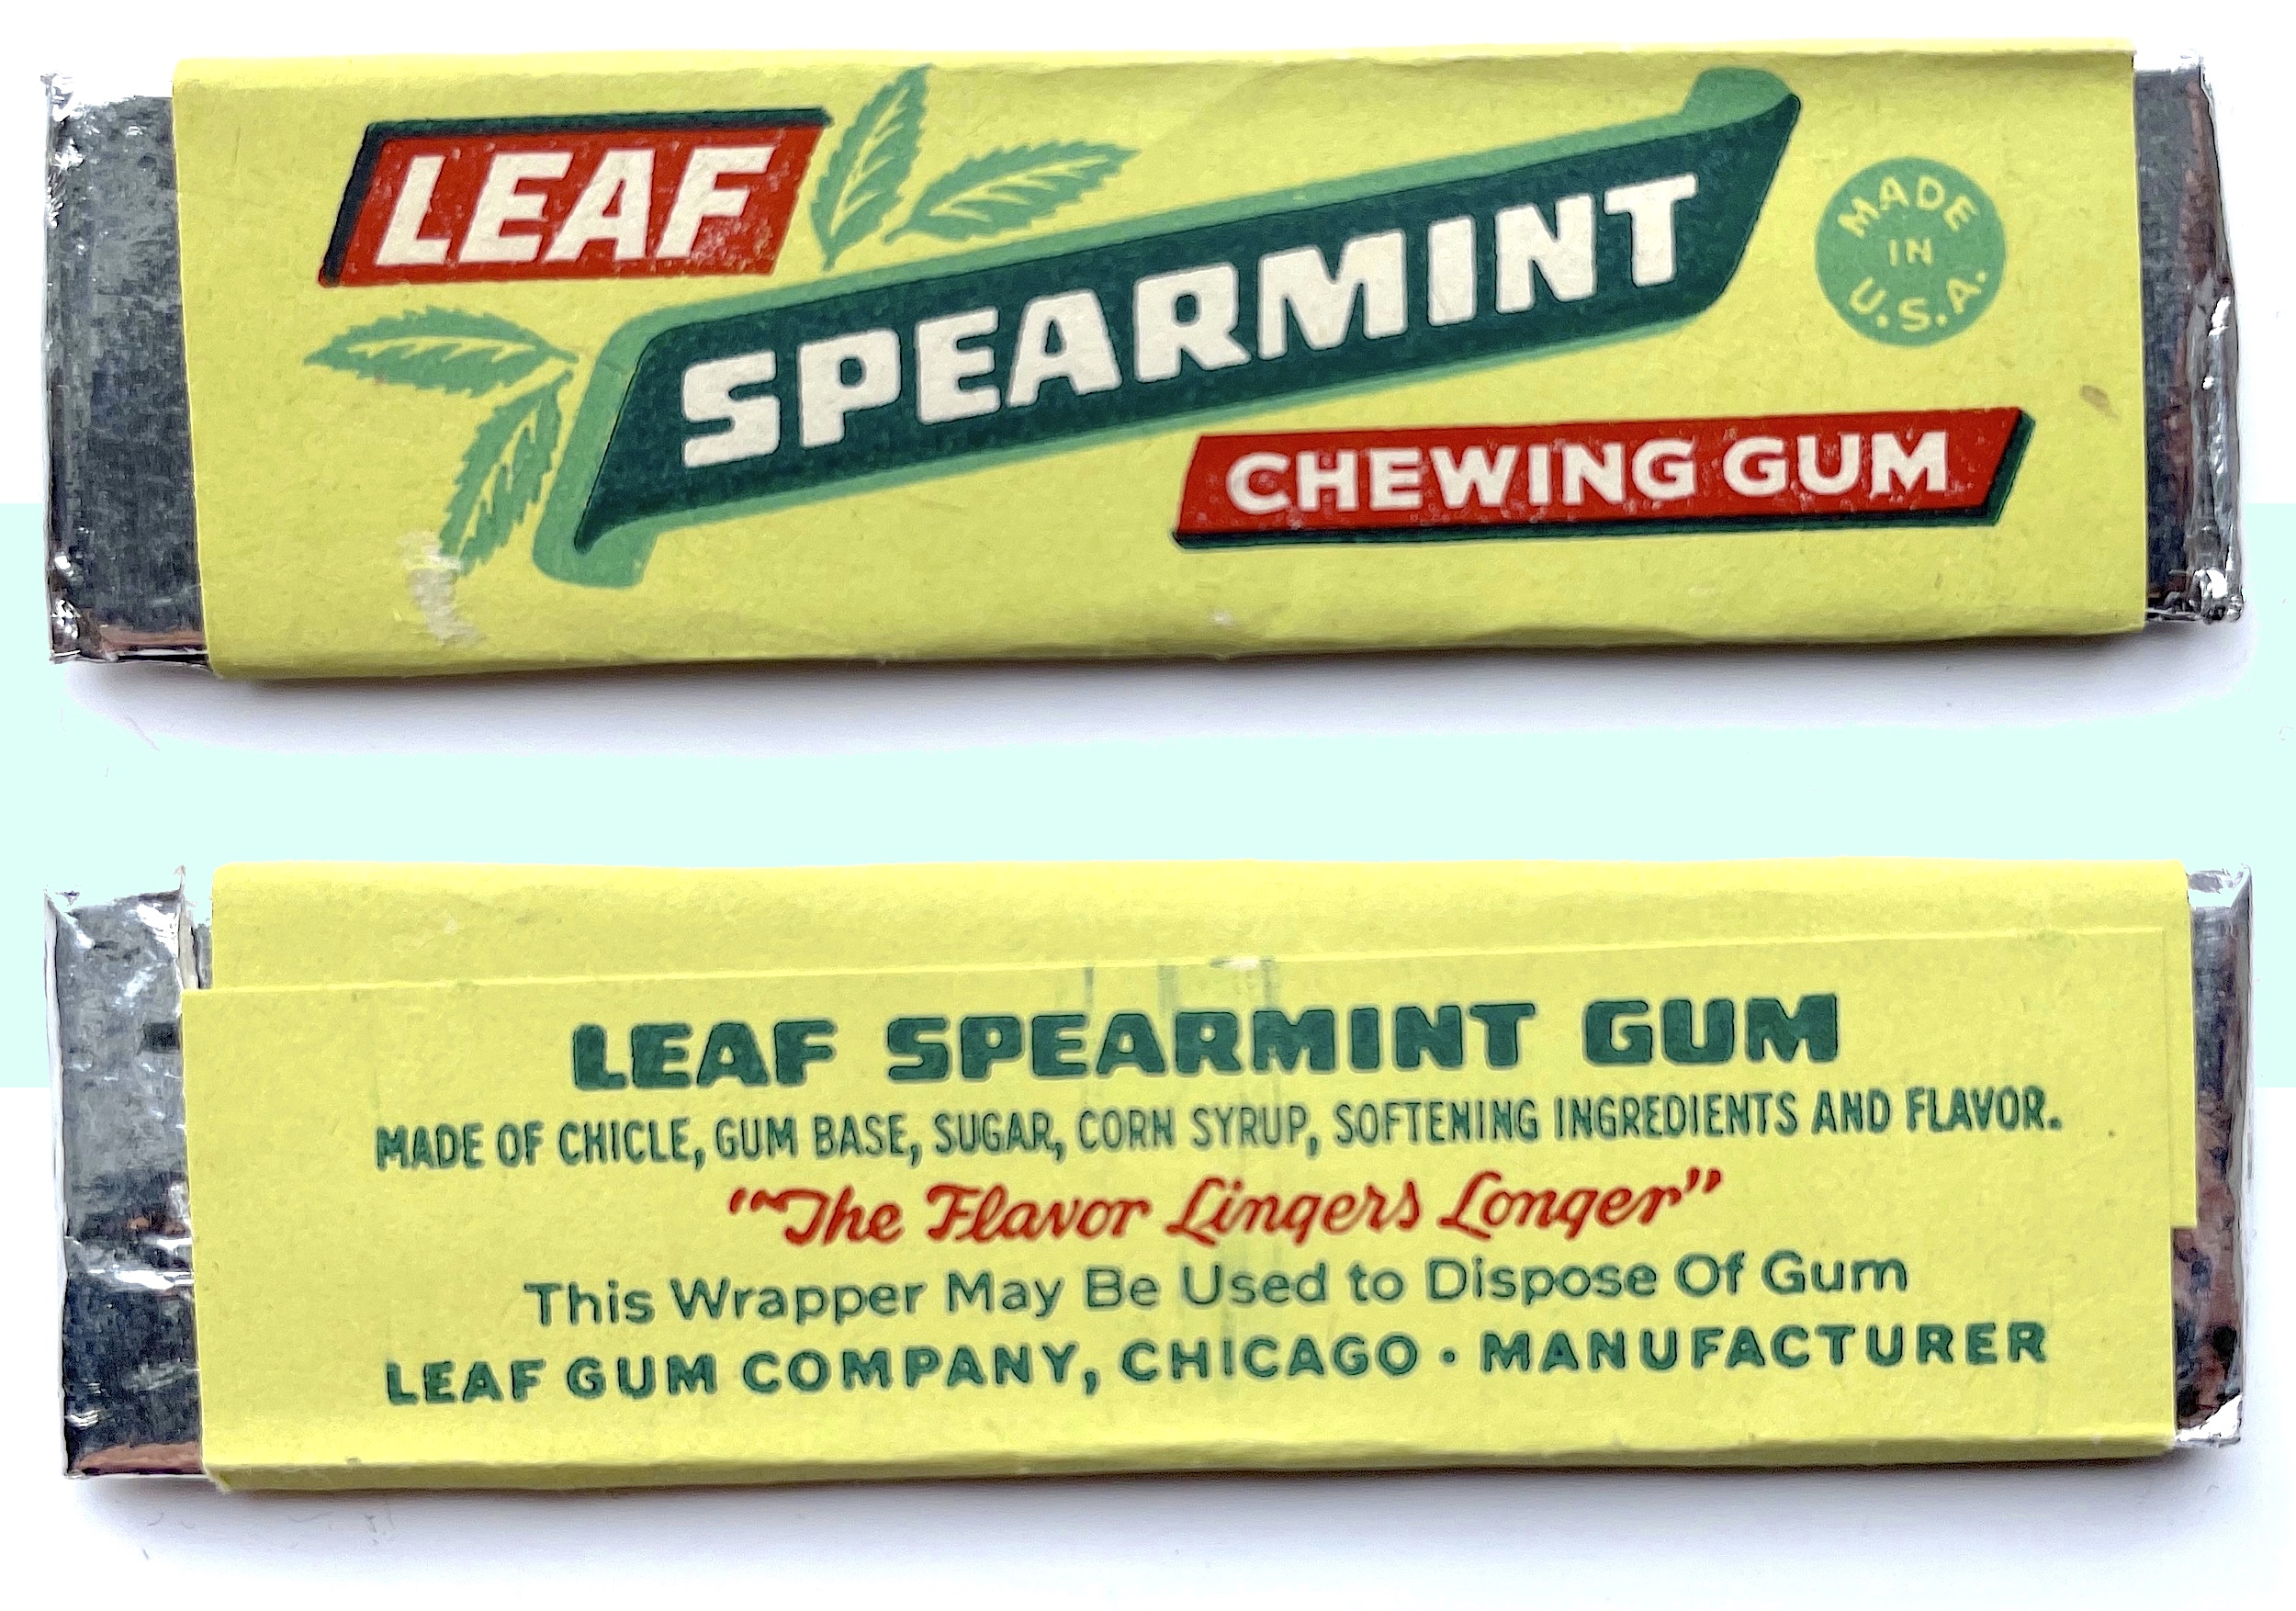 Leaf Gum Company, est. 1940